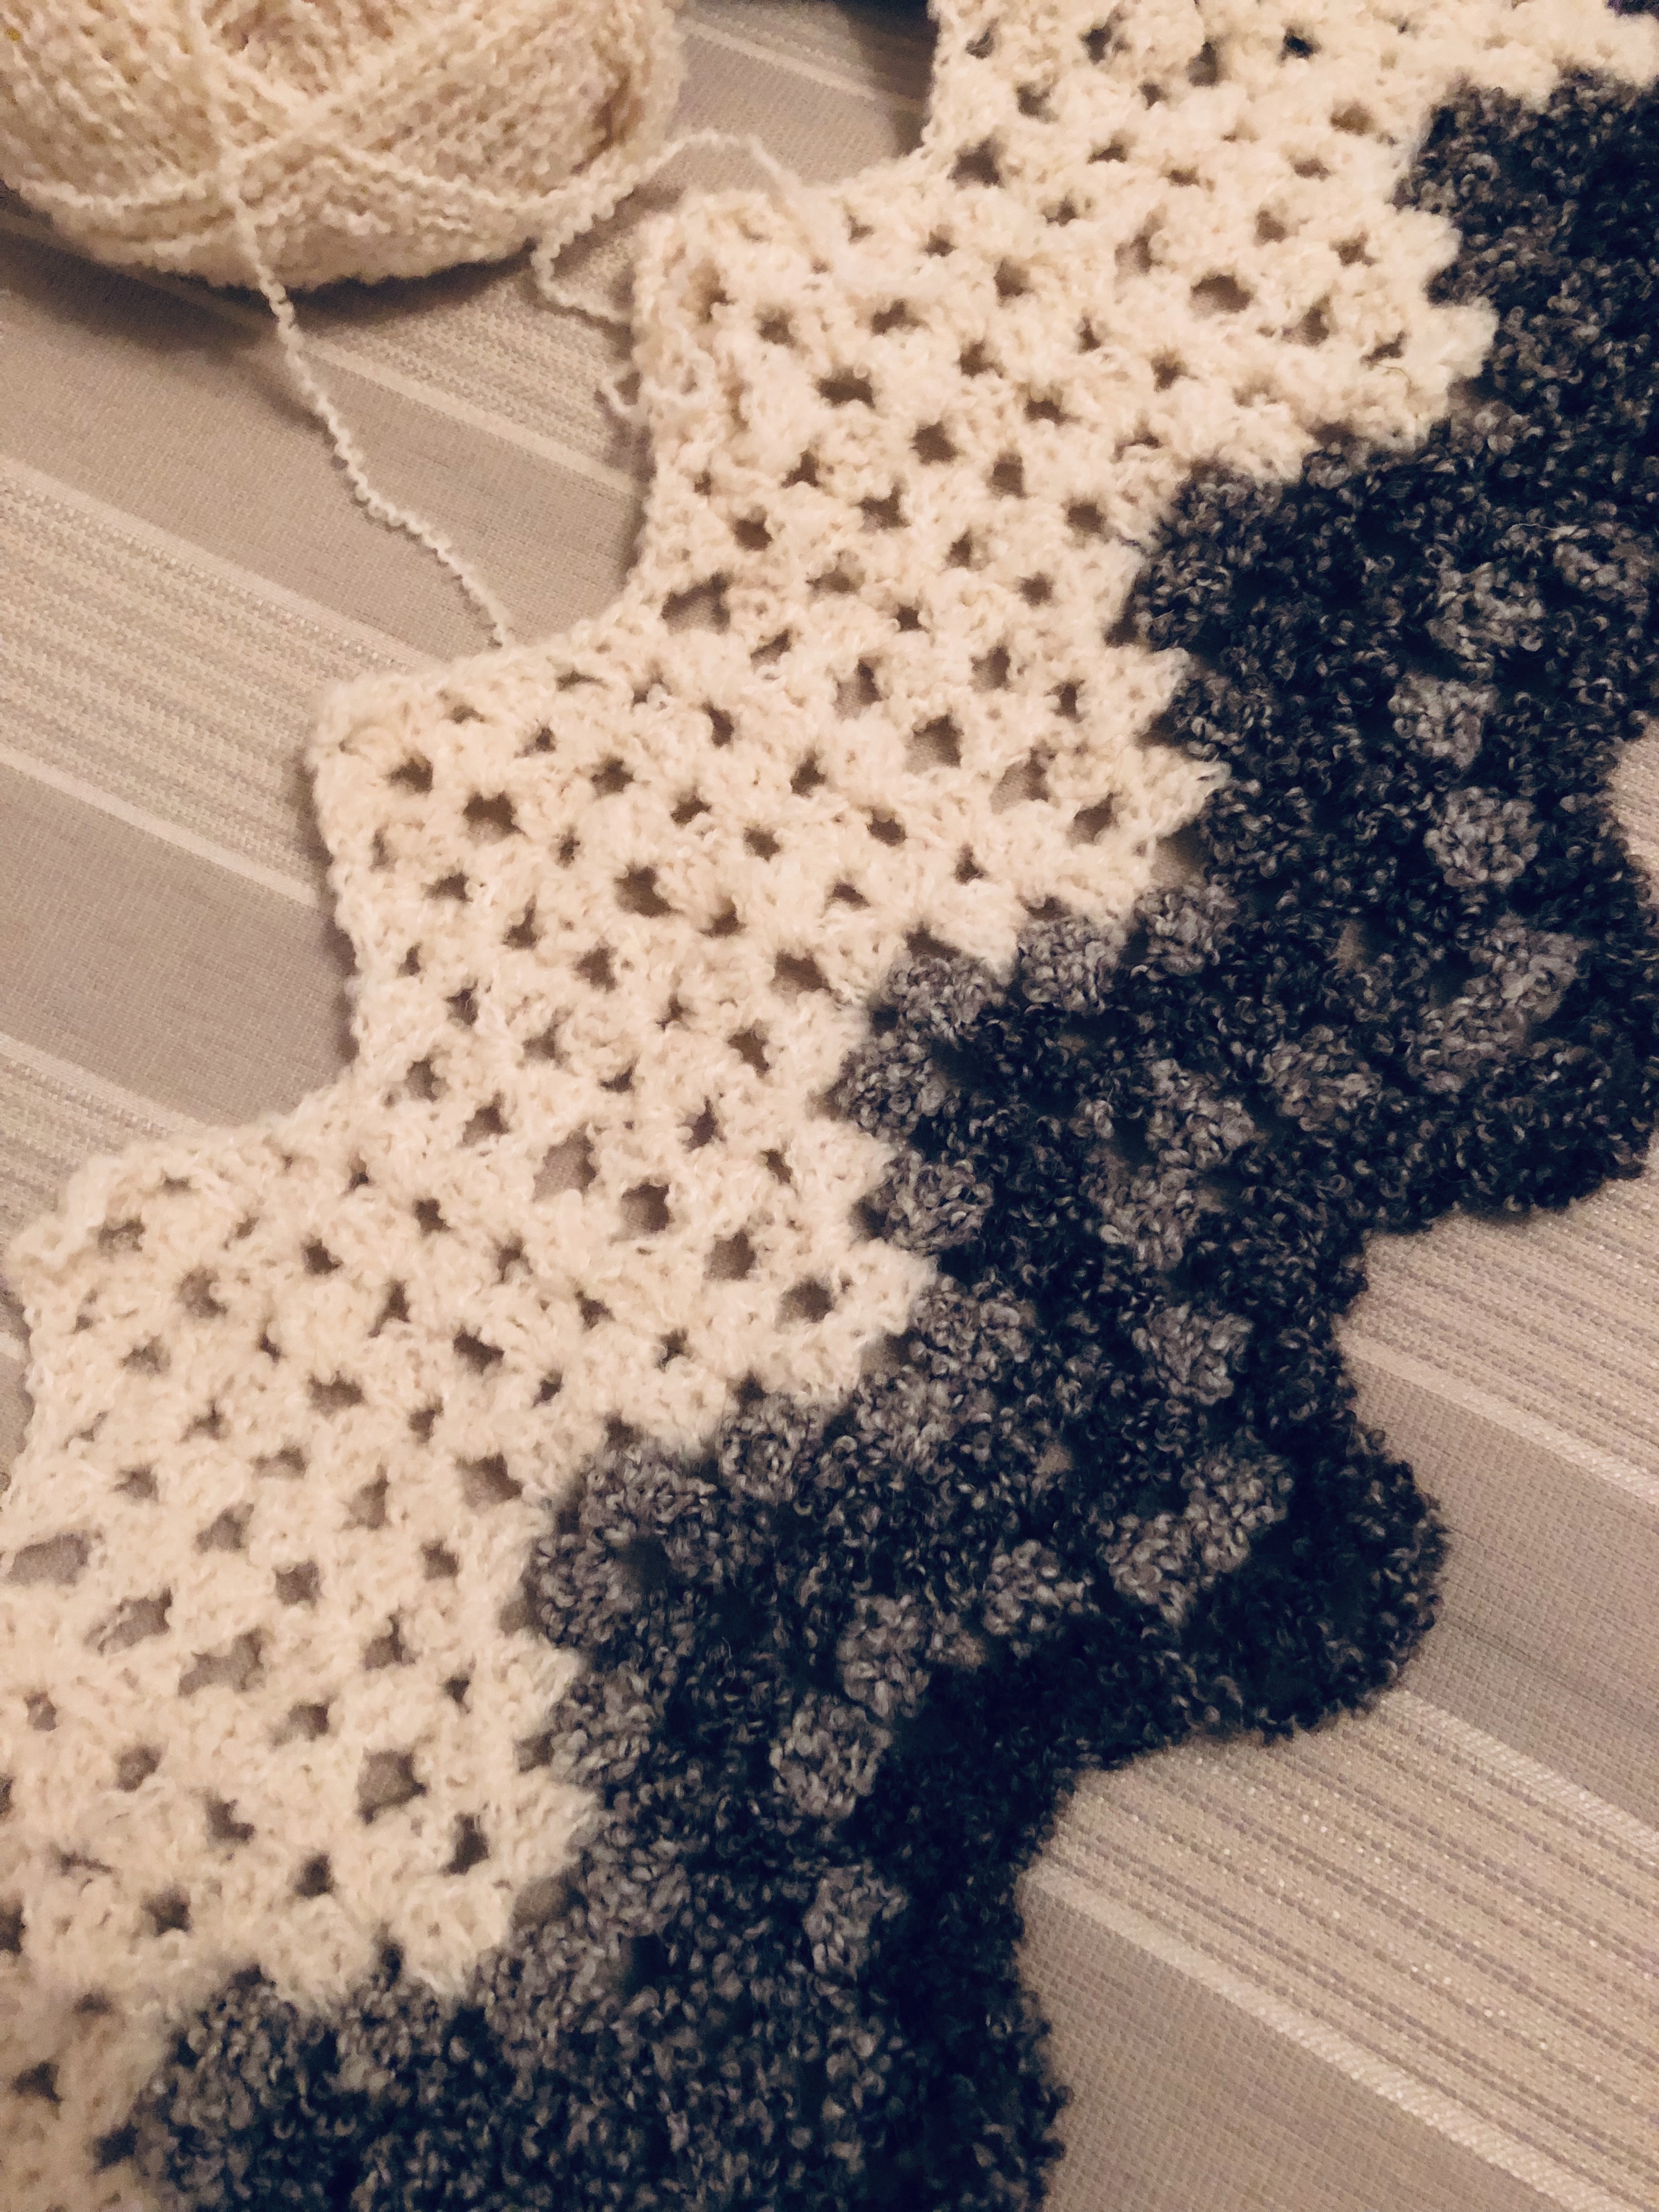 Boucle yarn in granny stitch